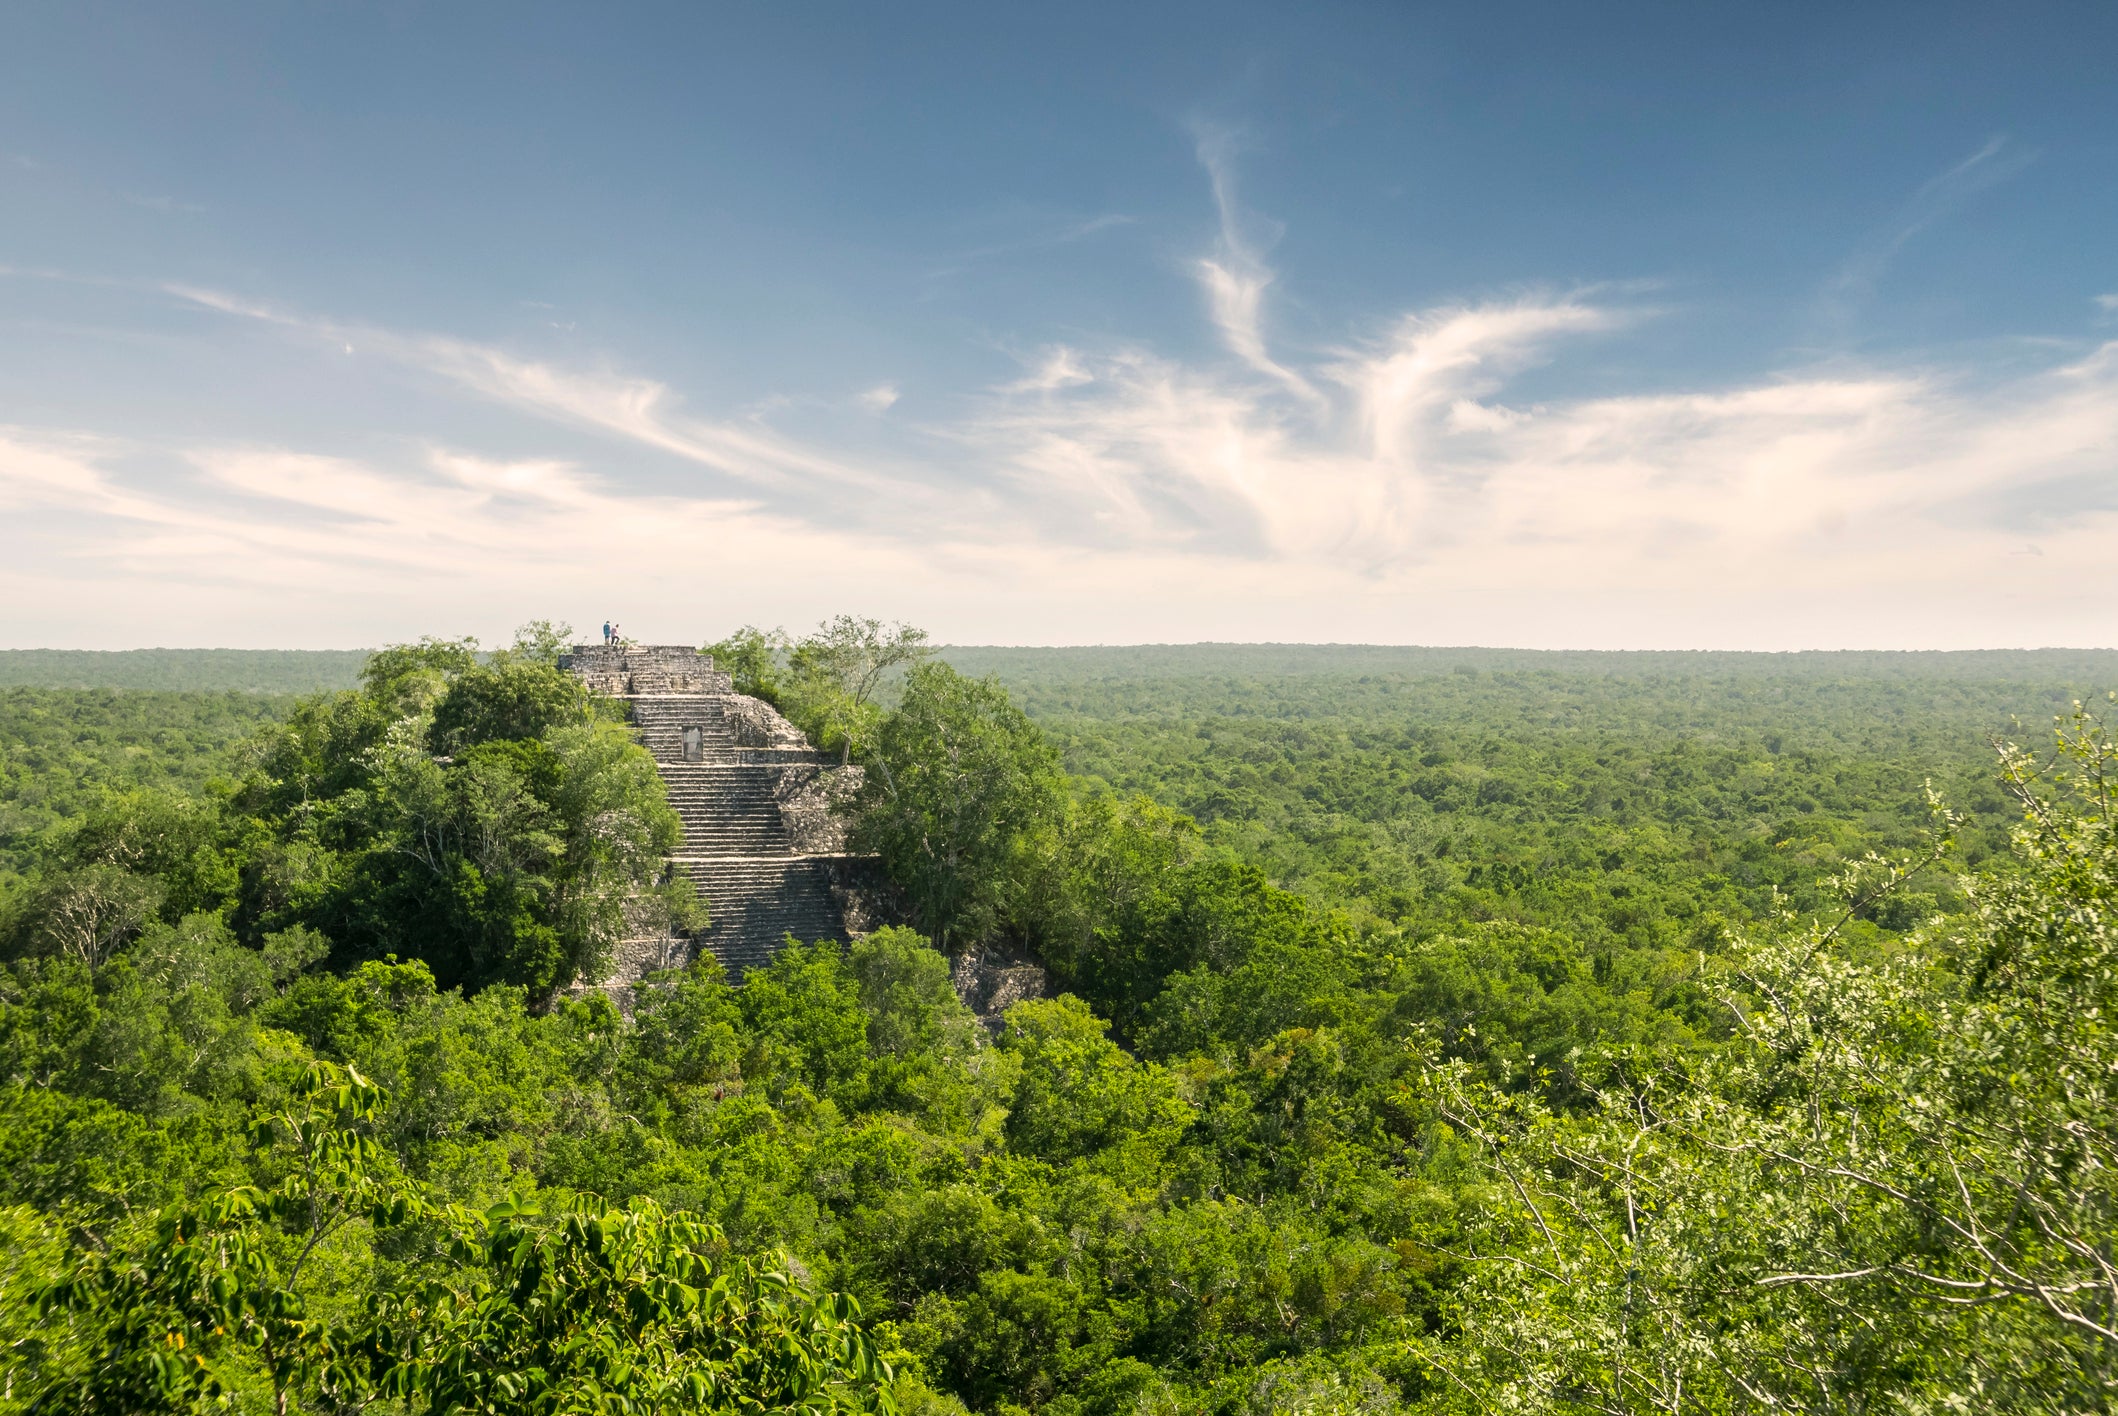 Untamed nature has grown up around many Mayan ruins